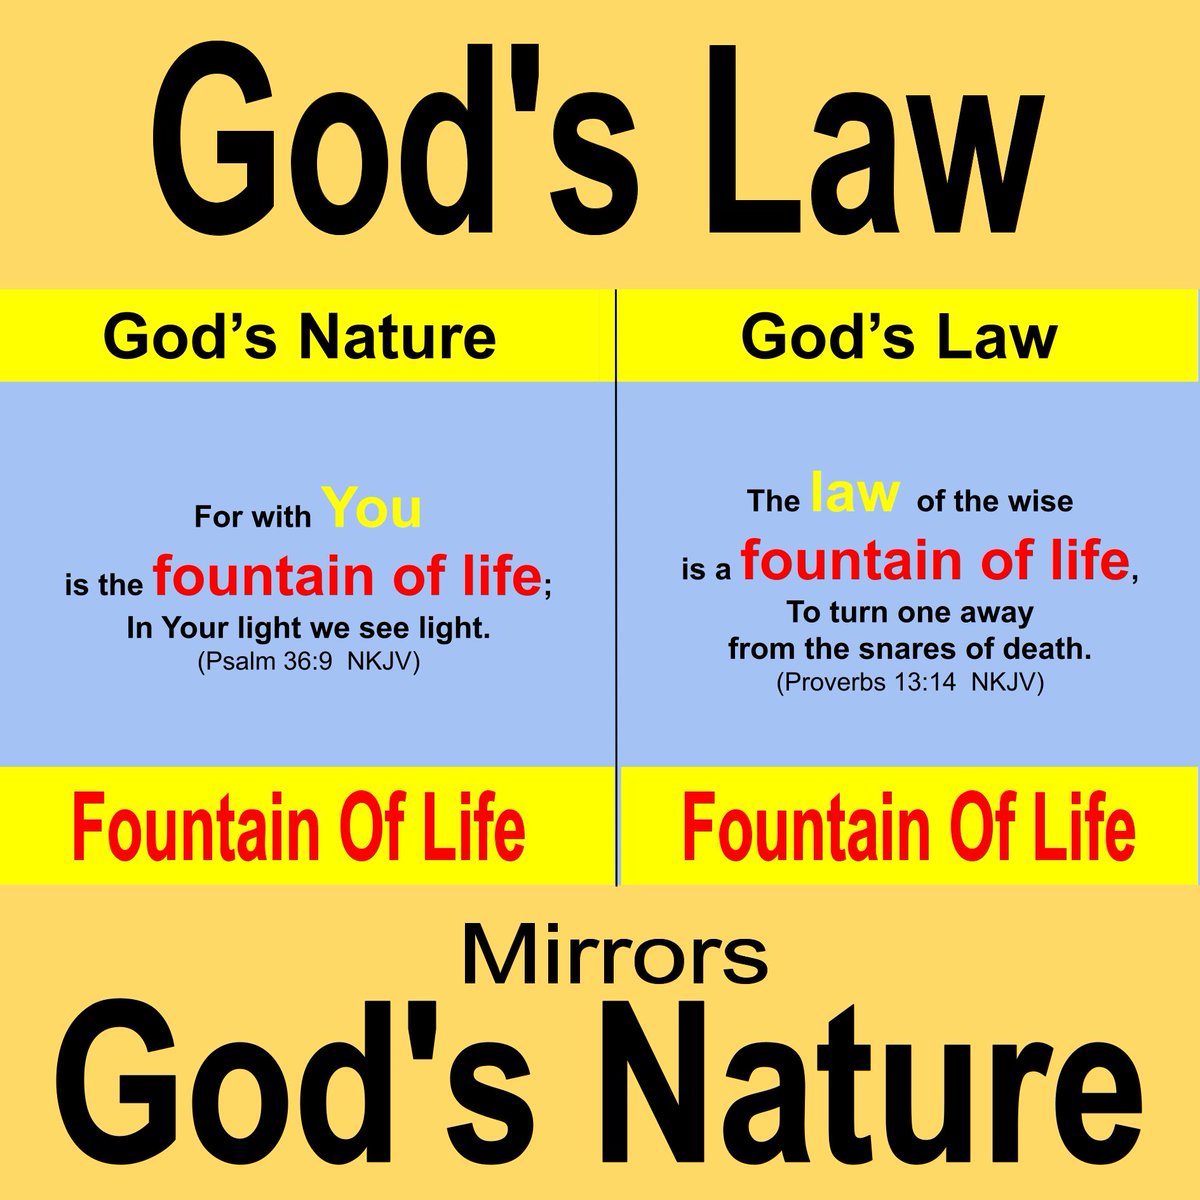 #Bible #LawOfGod #Mirrors #NatureOfGod #FountainOfLife